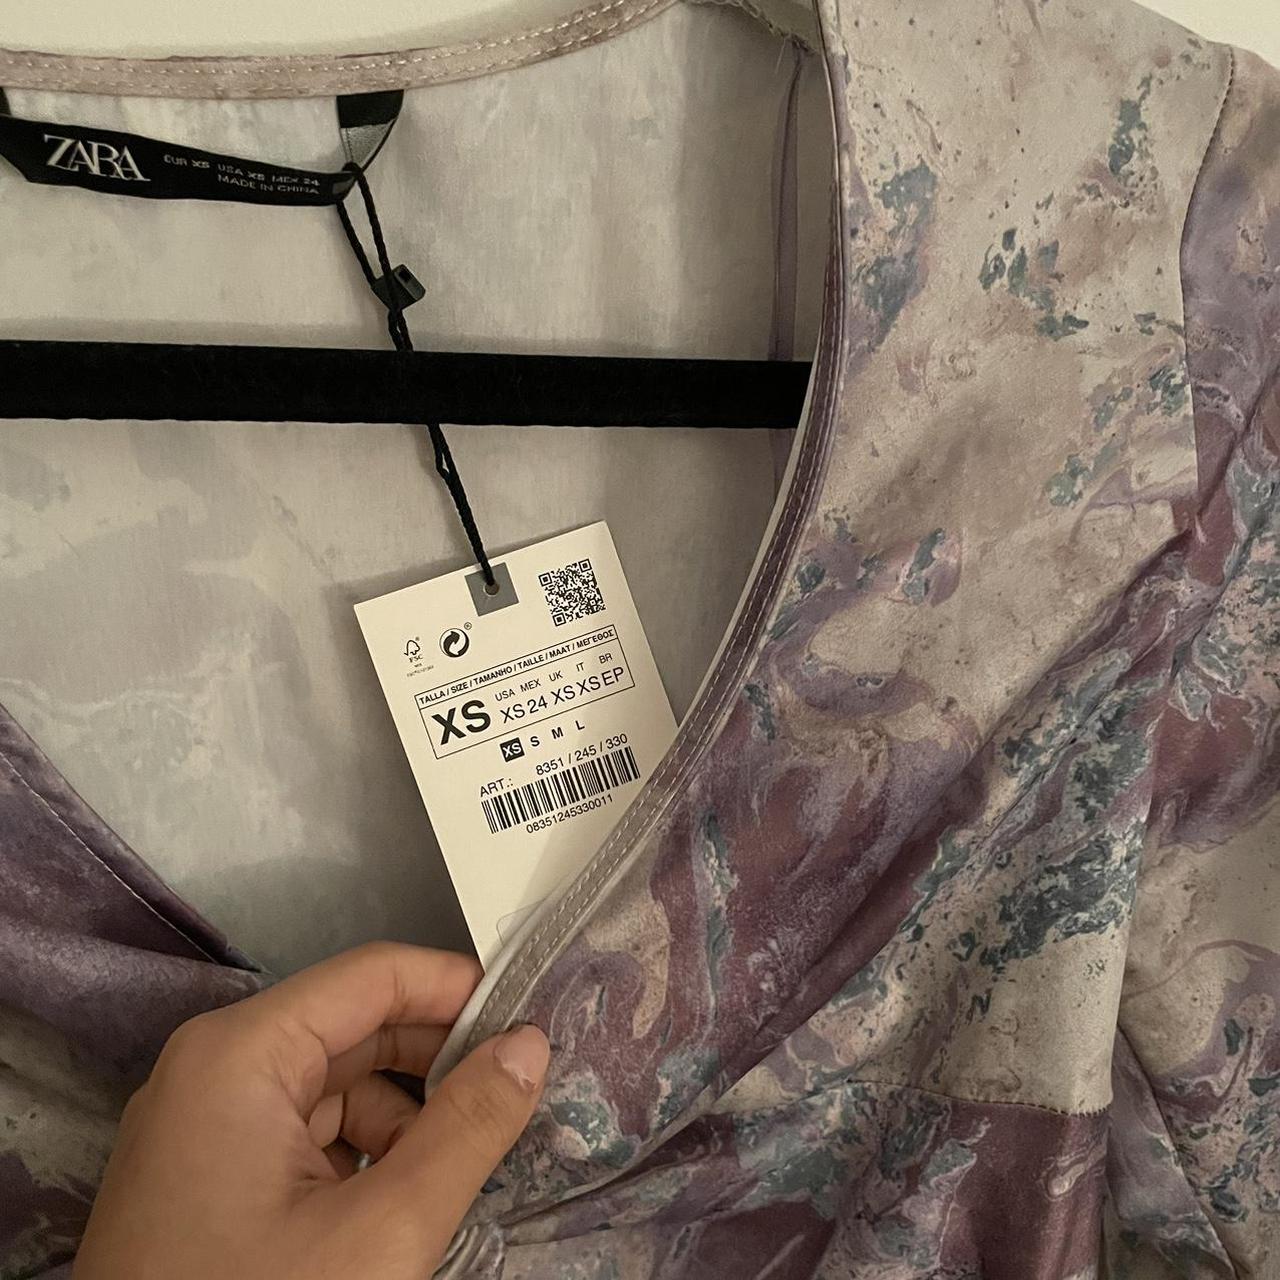 Zara Women's White and Purple Blouse (3)